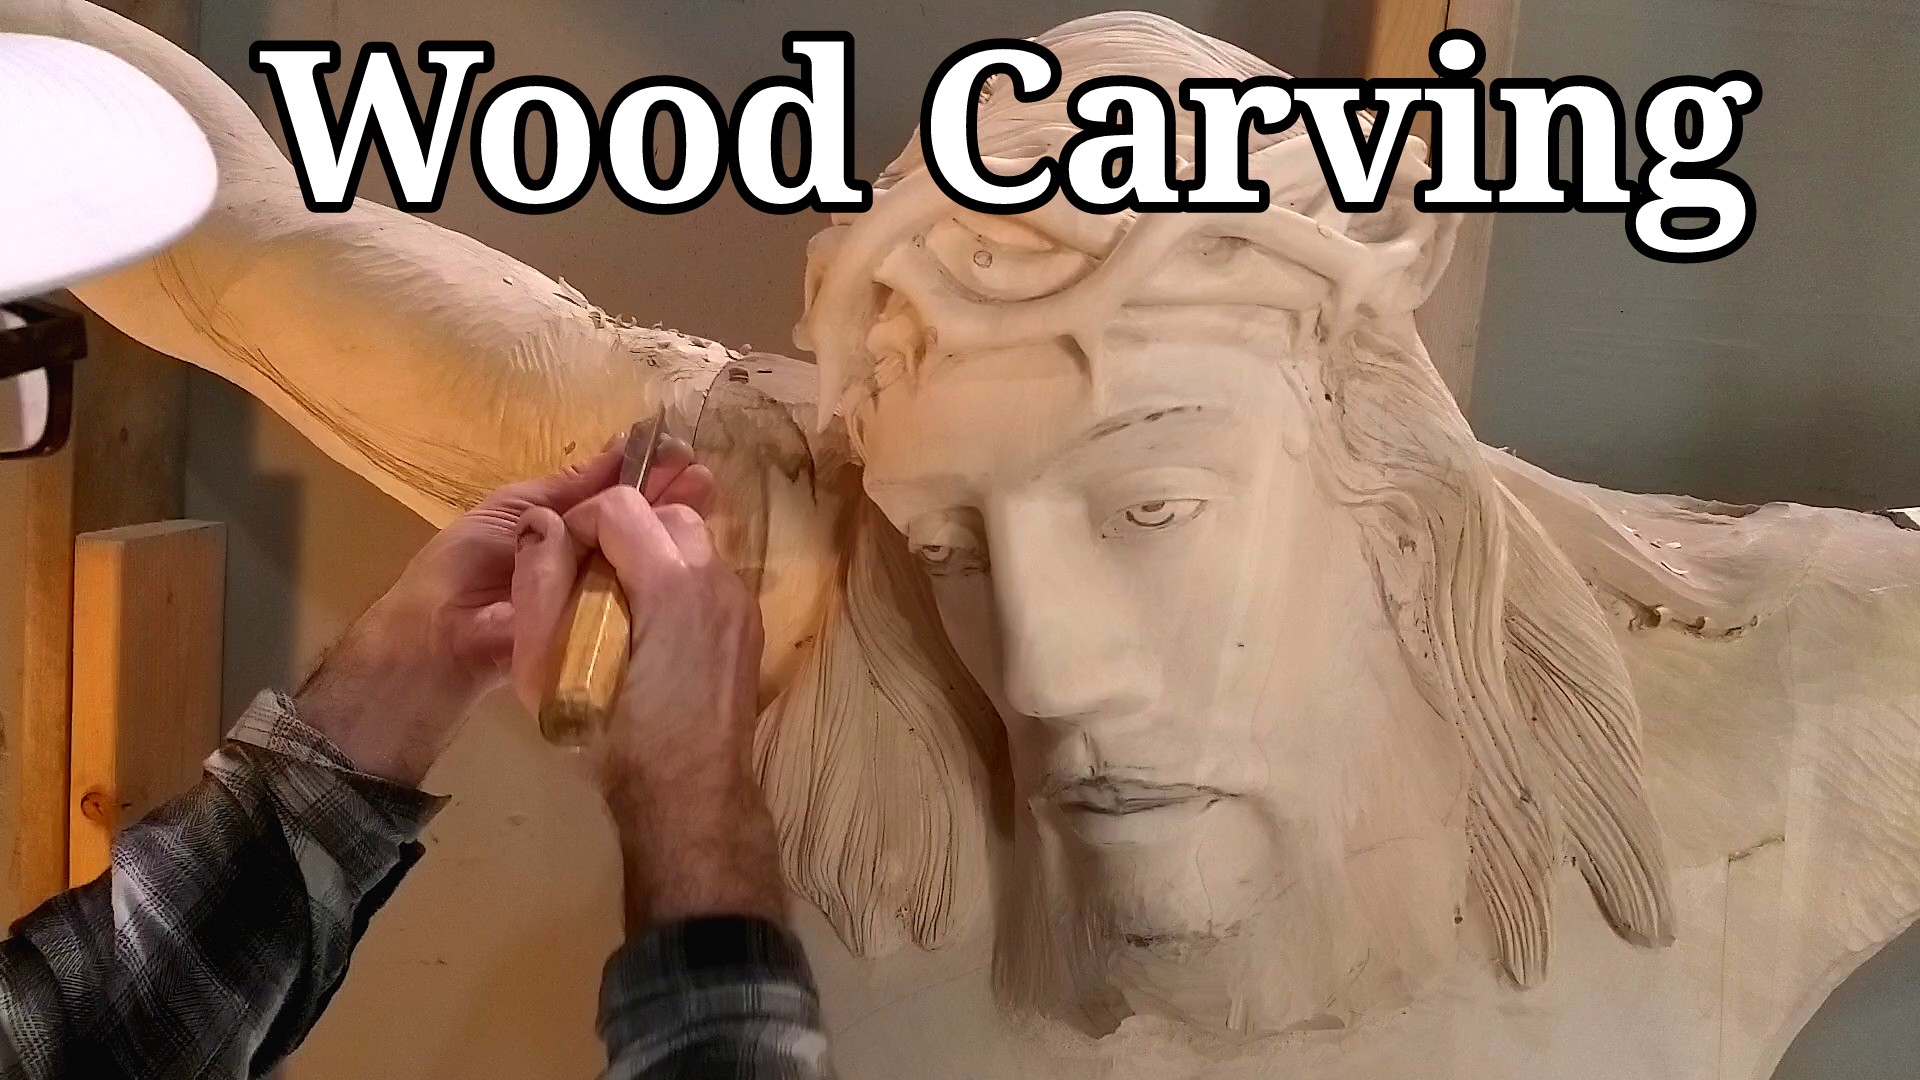 Wood carving Jesus in the cross